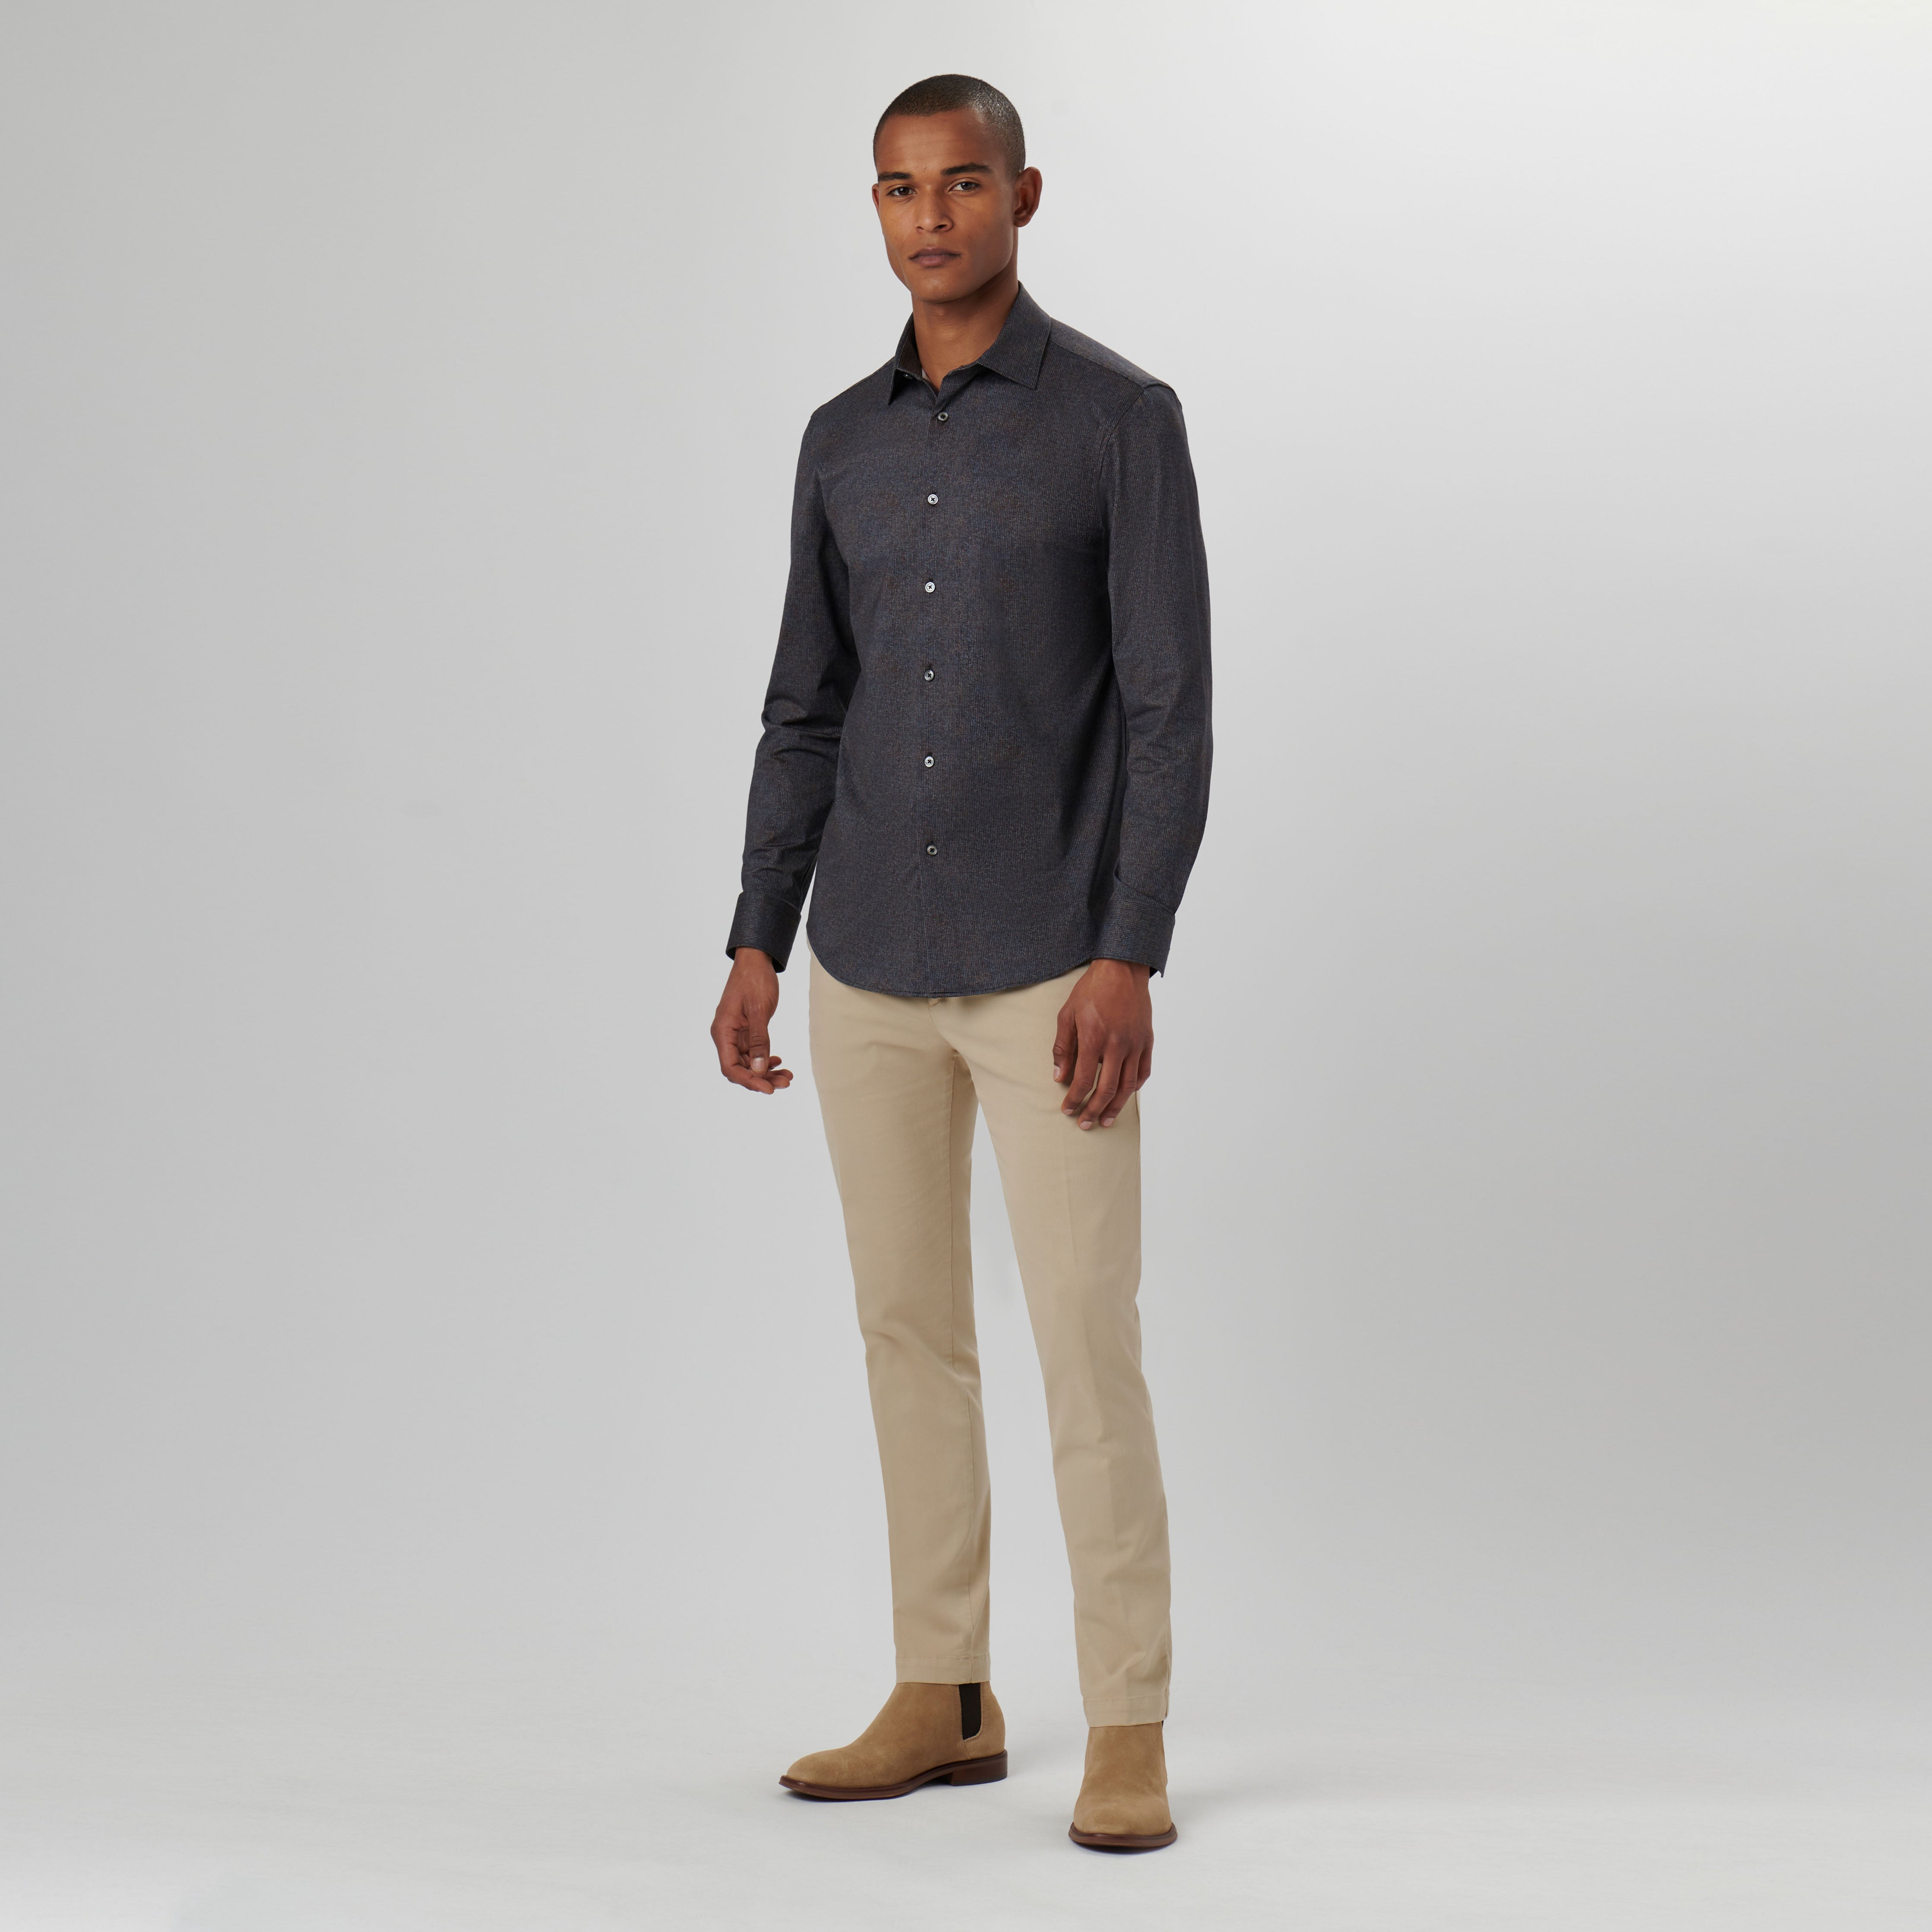 London Collections: Men – Street Style | Brown pants men, Olive pants  outfit, Blue denim shirt